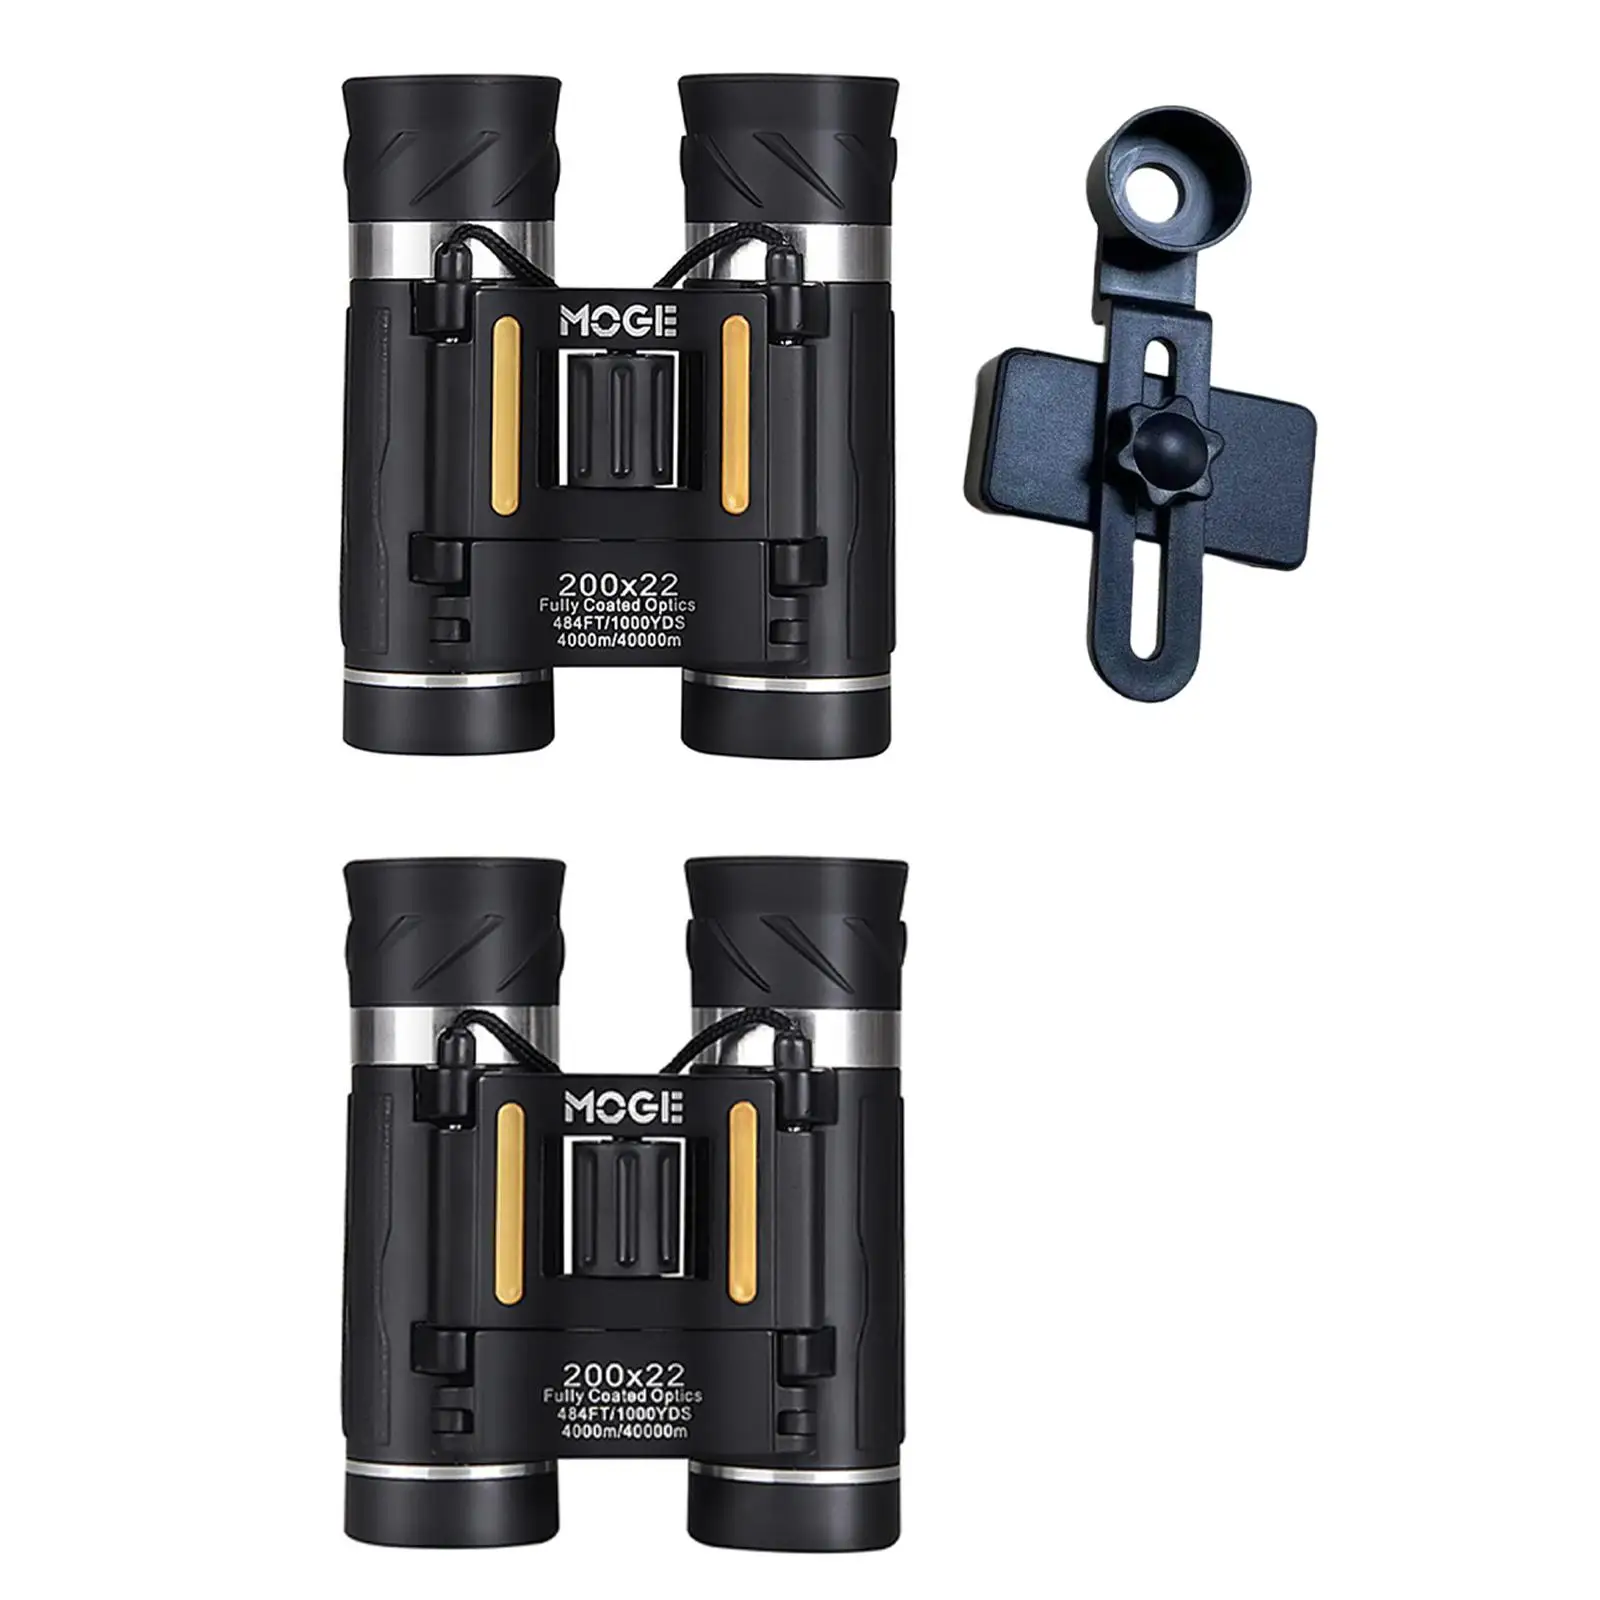 200x22 Large Eyepiece Professional Compact Small IPX7 Waterproof Durable Binoculars for Hiking Opera Sightseeing Wildlife Black